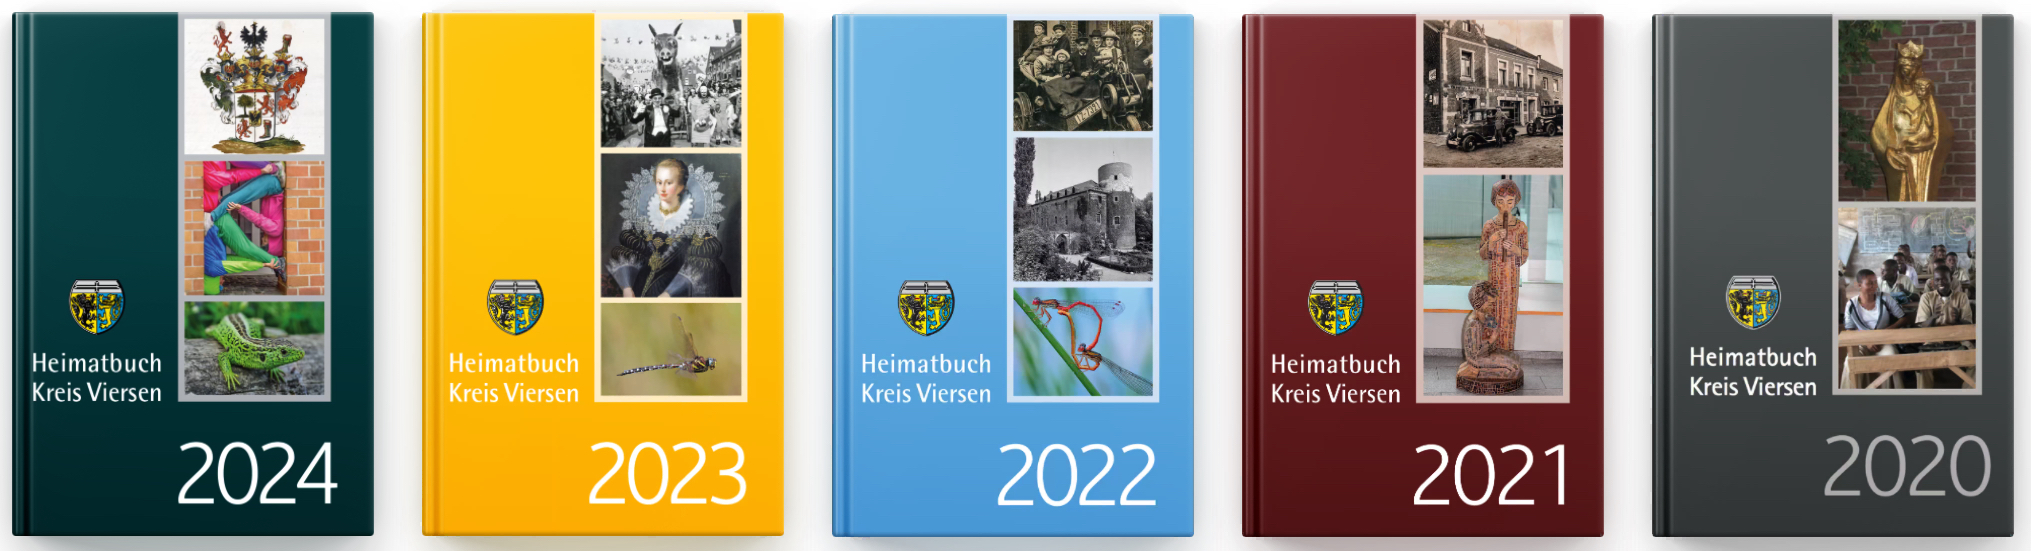 Heimatbuch Kreis Viersen 2020-2024